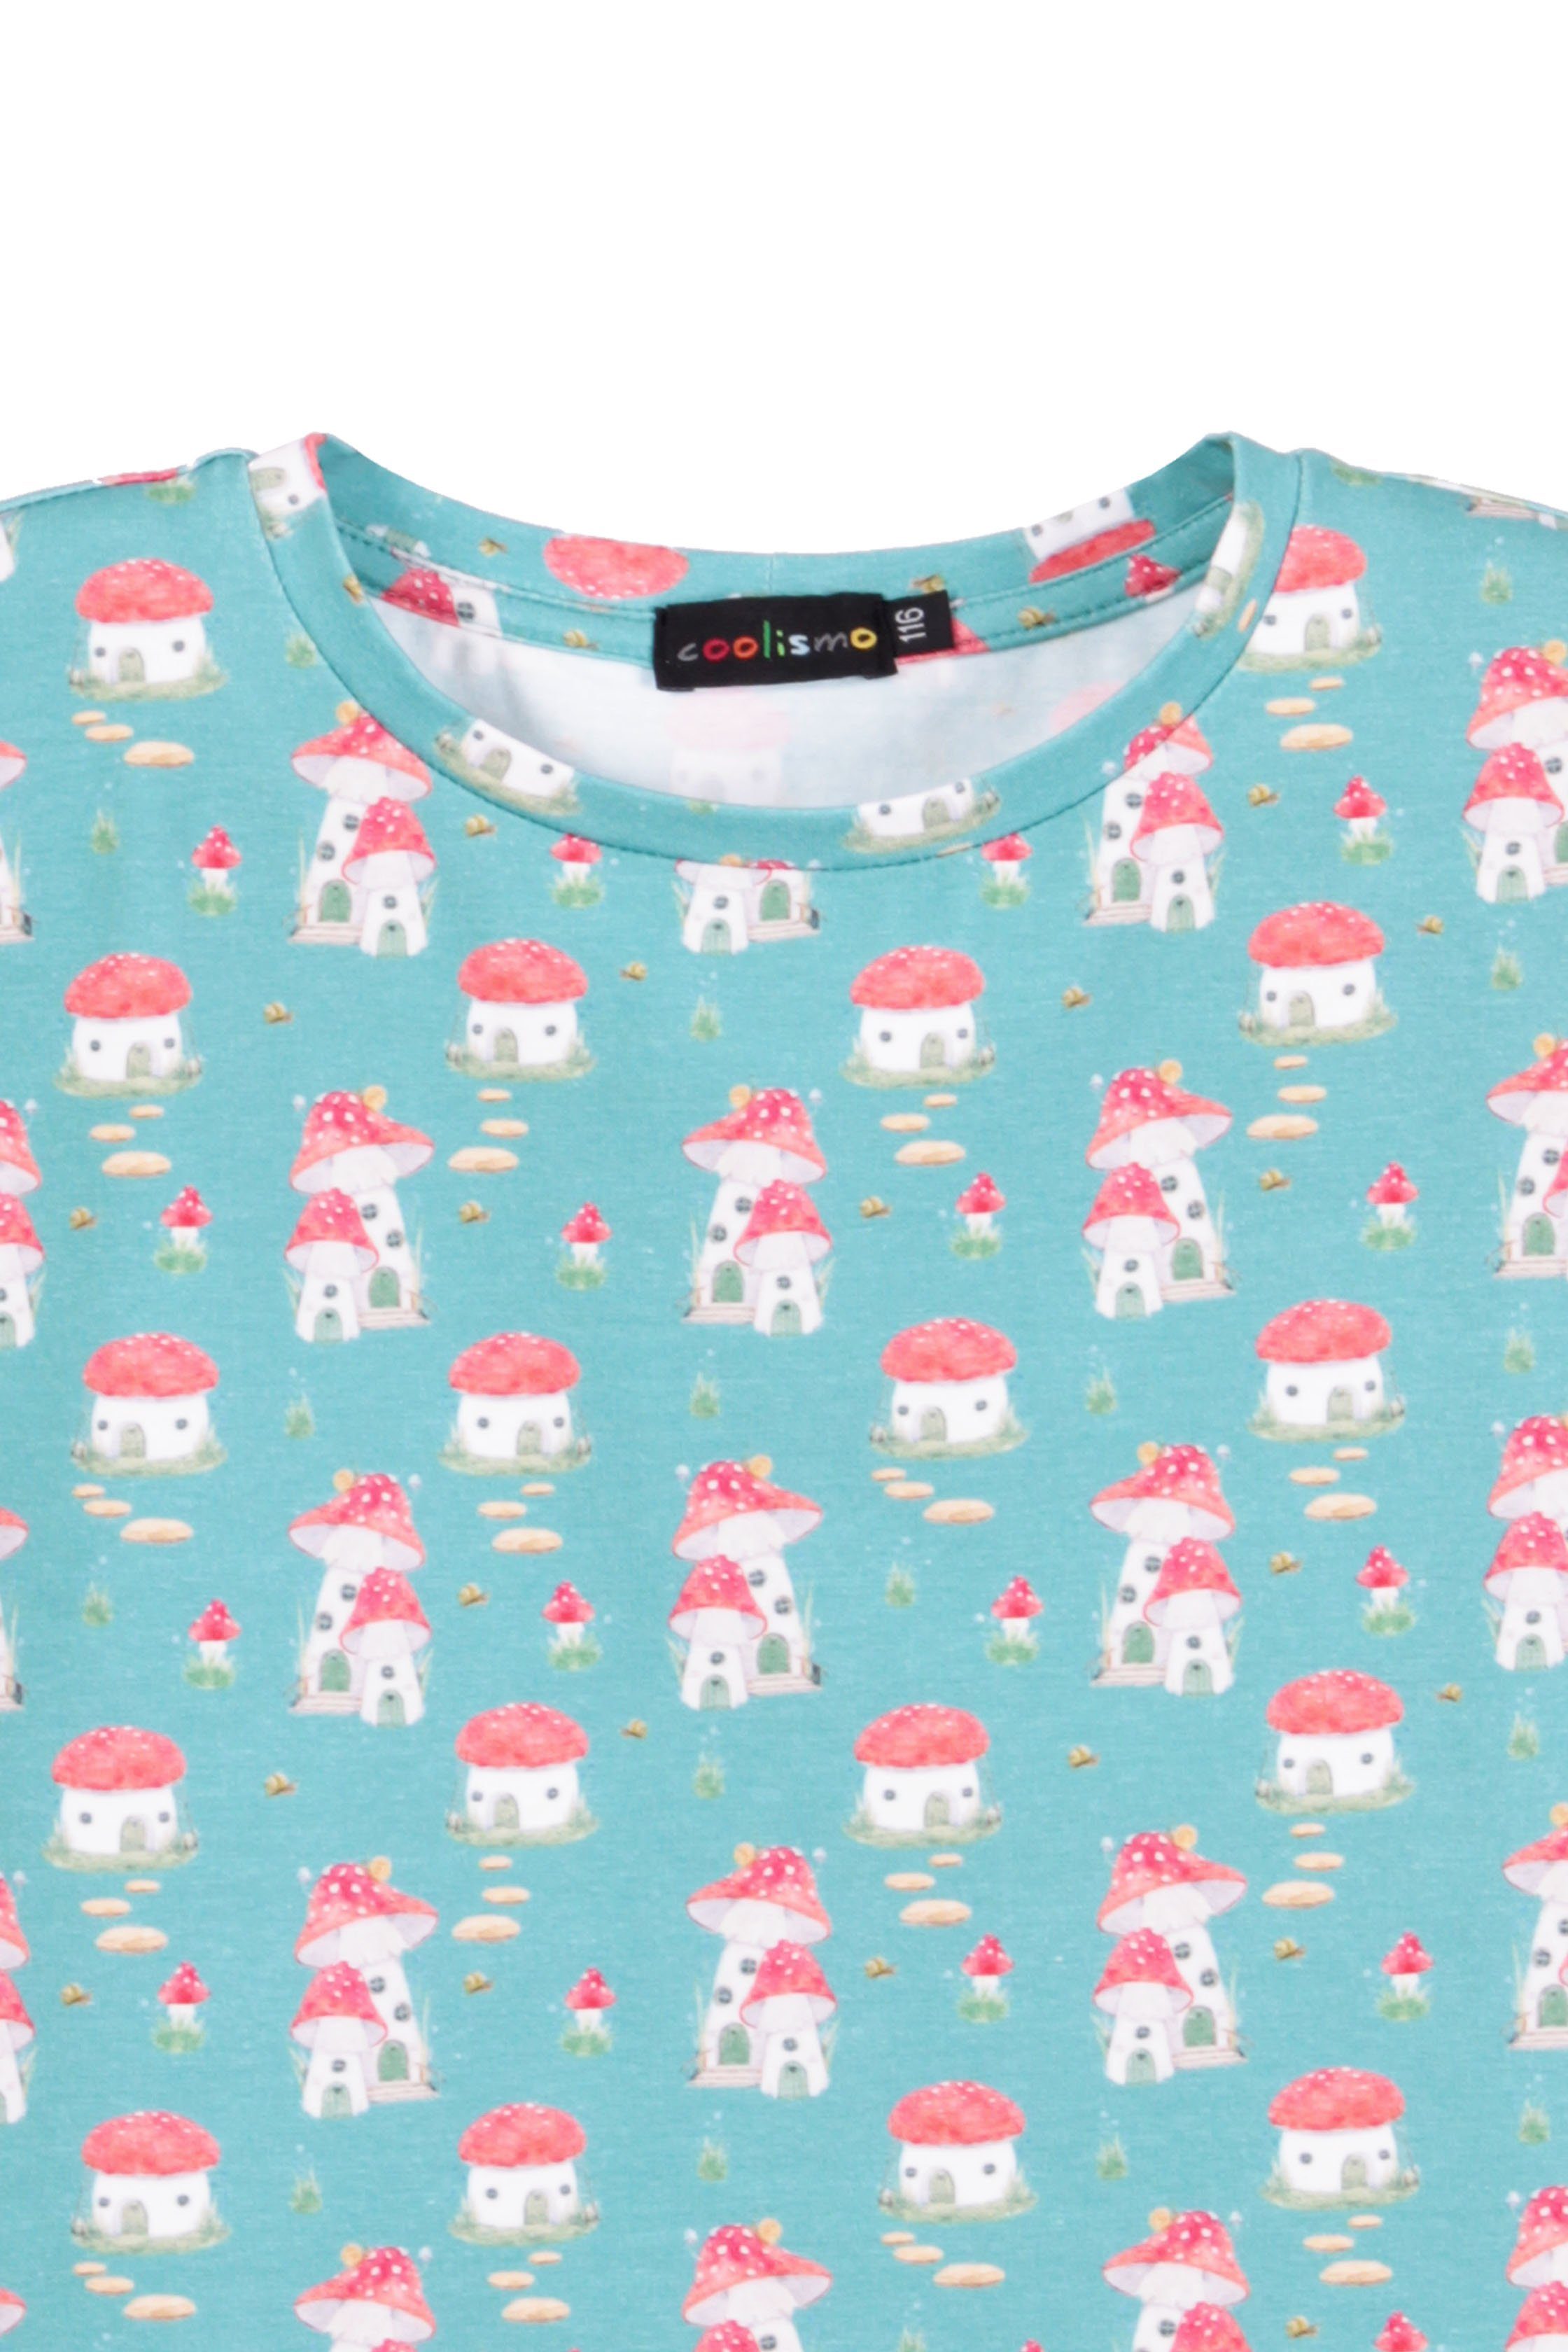 europäische Produktion T-Shirt Pferdchen Baumwolle, Pilz-Design T-Shirt Mädchen Rundhalsauschnitt, coolismo